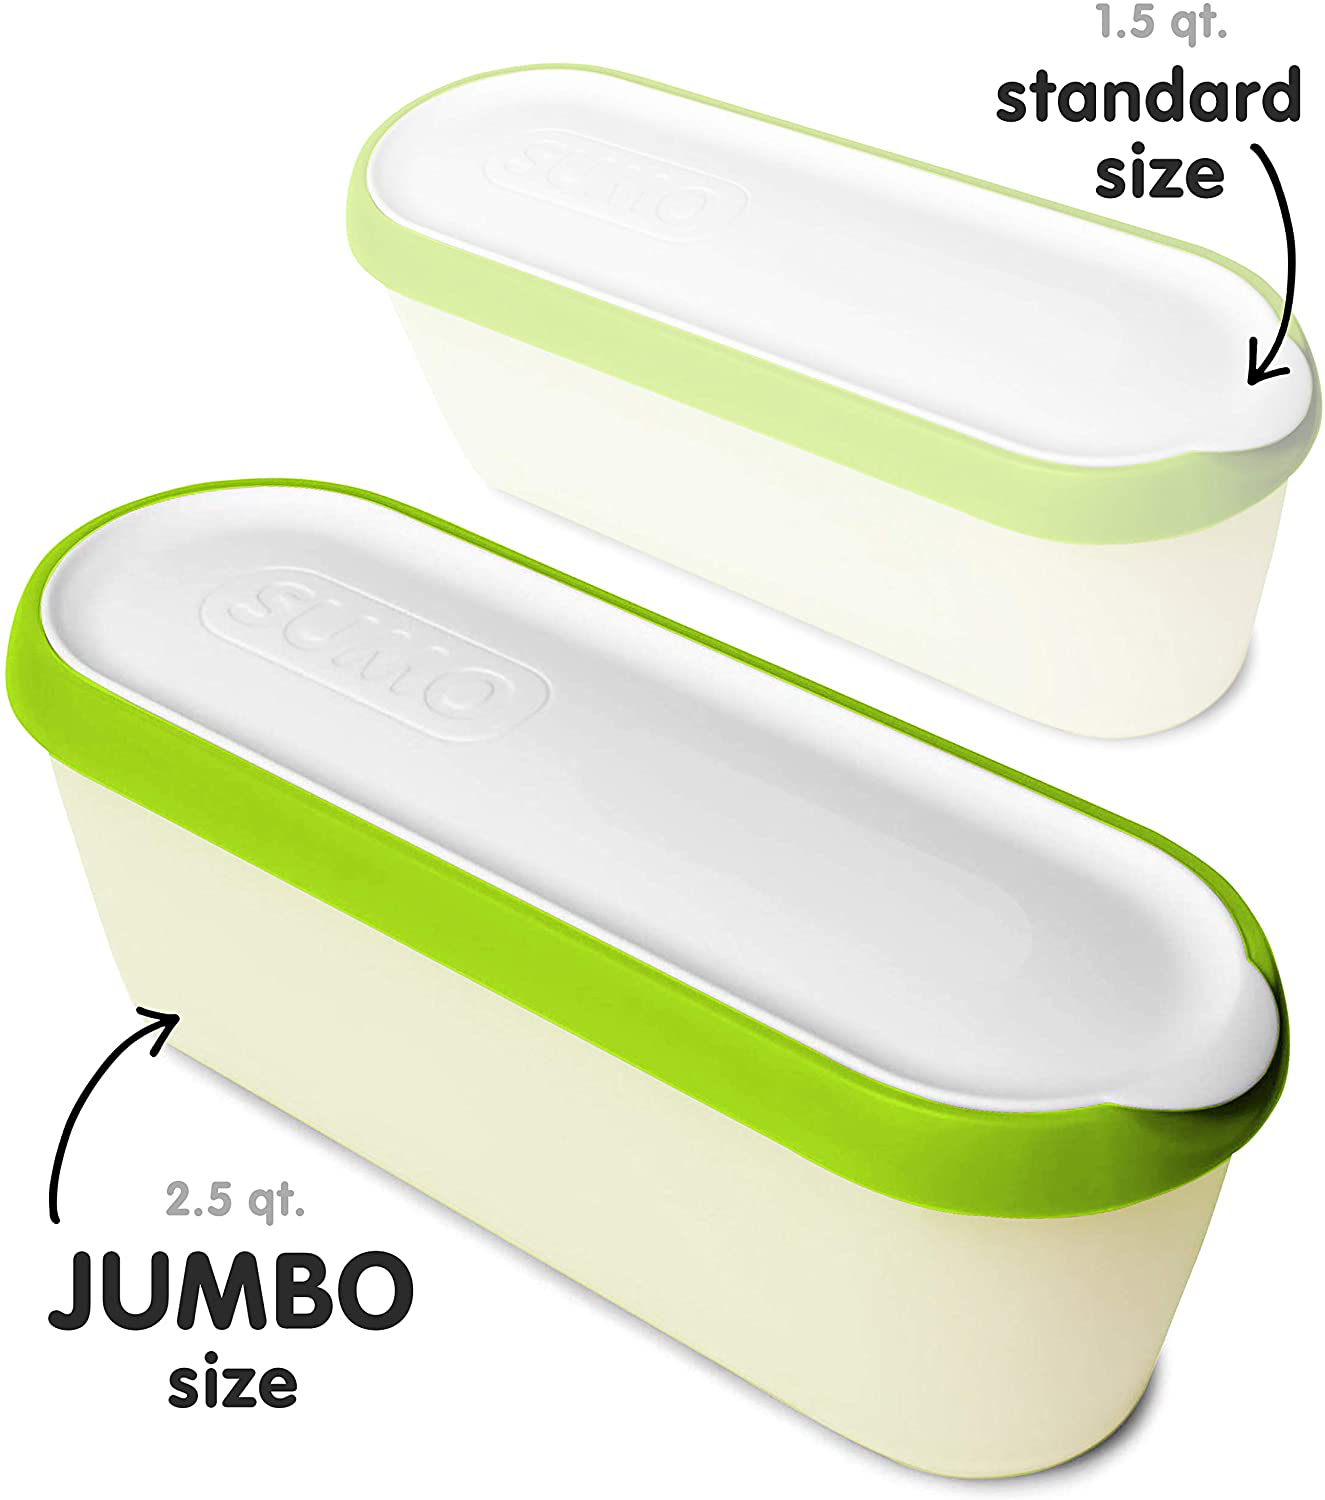 Sumo Ice Cream 1 Containers for Homemade Ice Cream 2.5 Quart Green